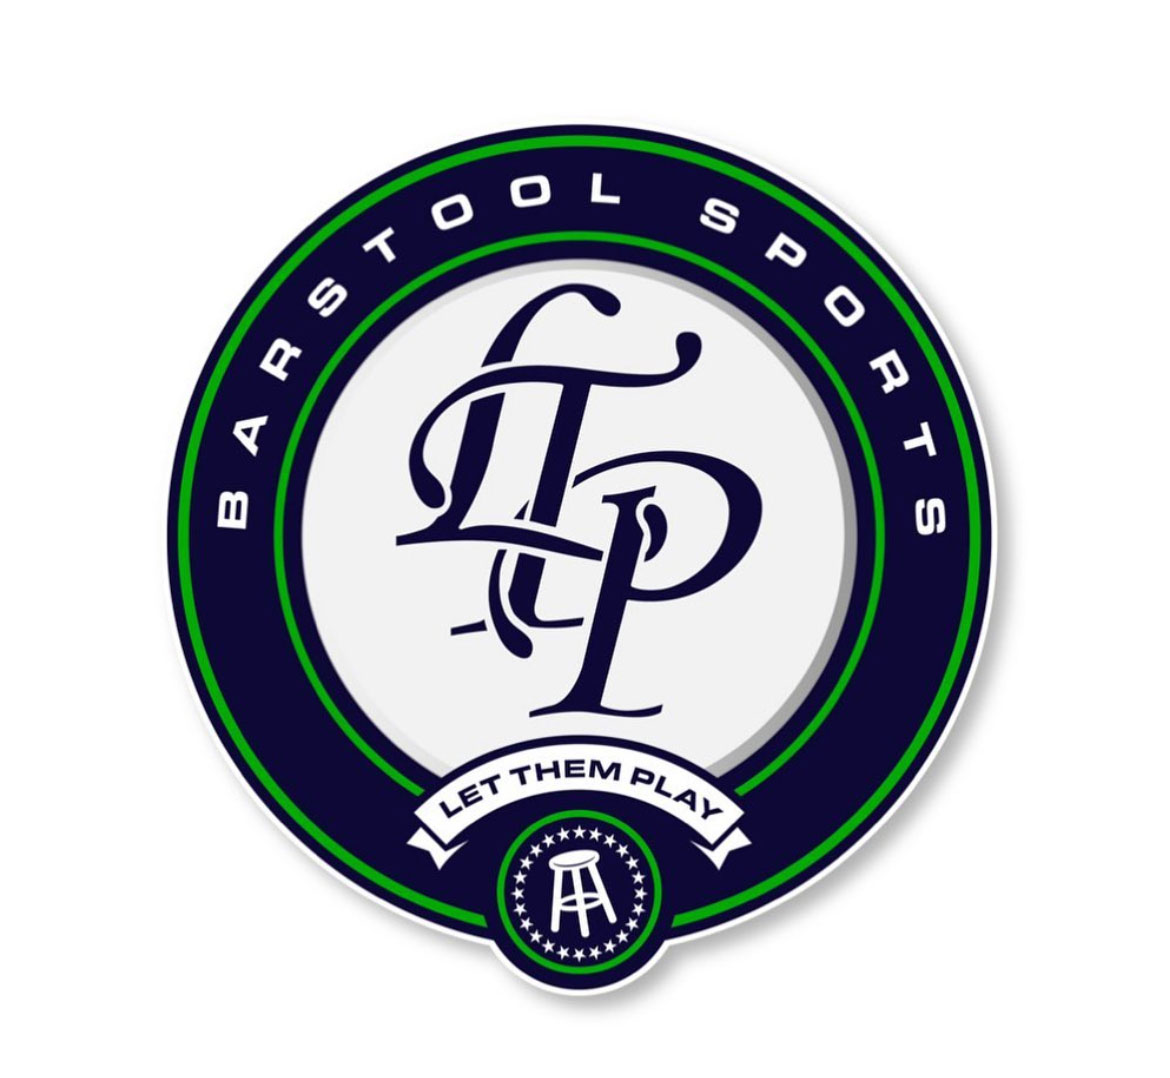 barstool sports logo creator